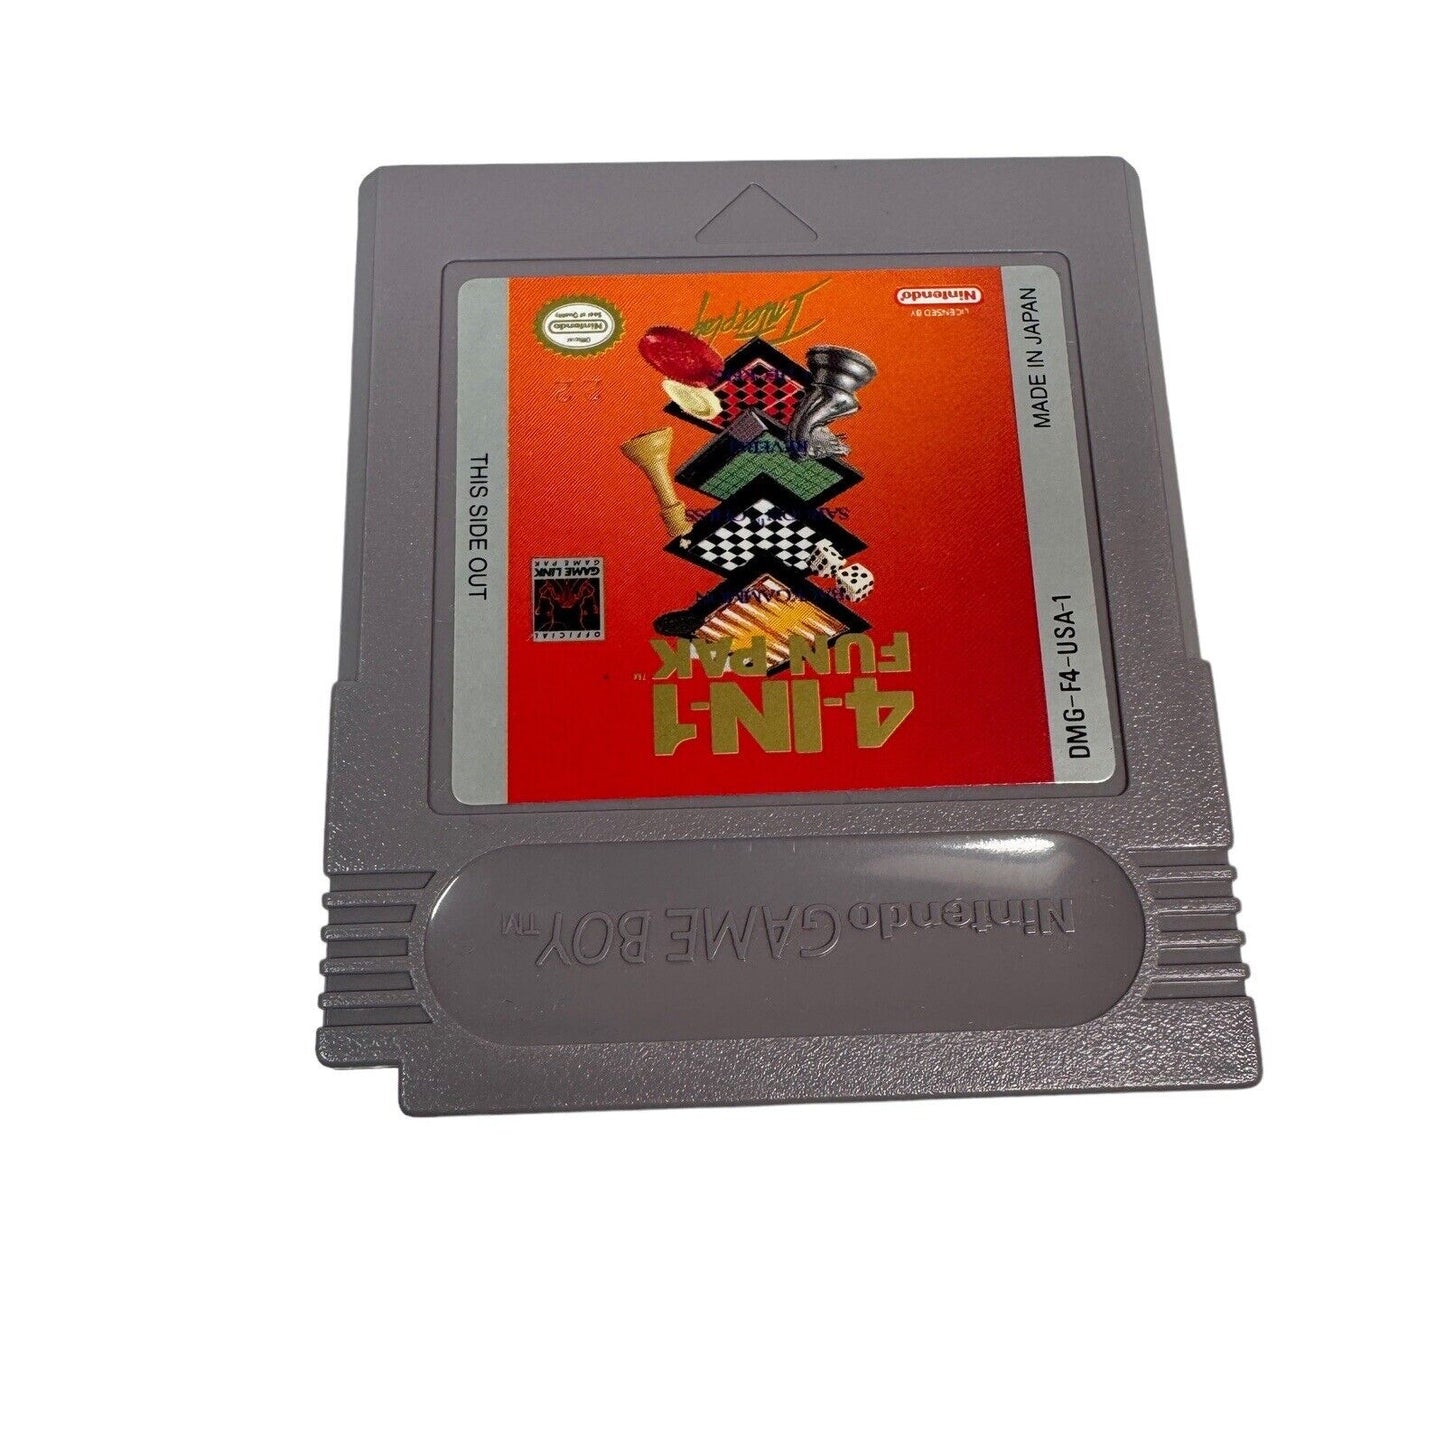 4-in-1 Fun Pak (Nintendo Game Boy) Complete In Box CIB w/ Inserts VTG Interplay